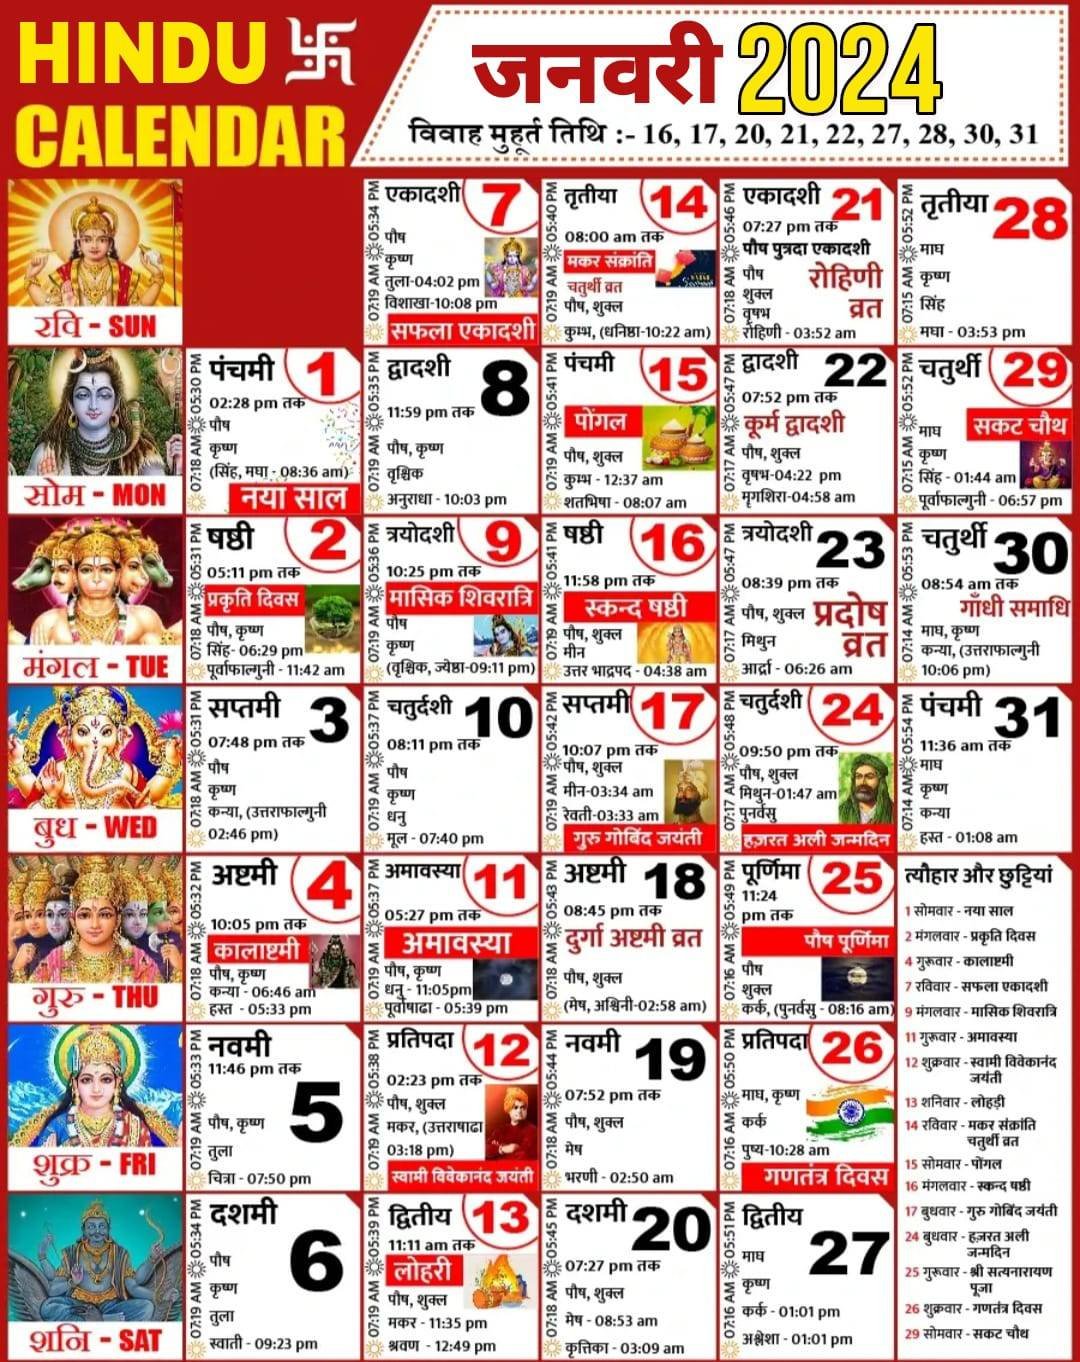 thakur-prasad-calendar-march-2024-ivonne-lianne